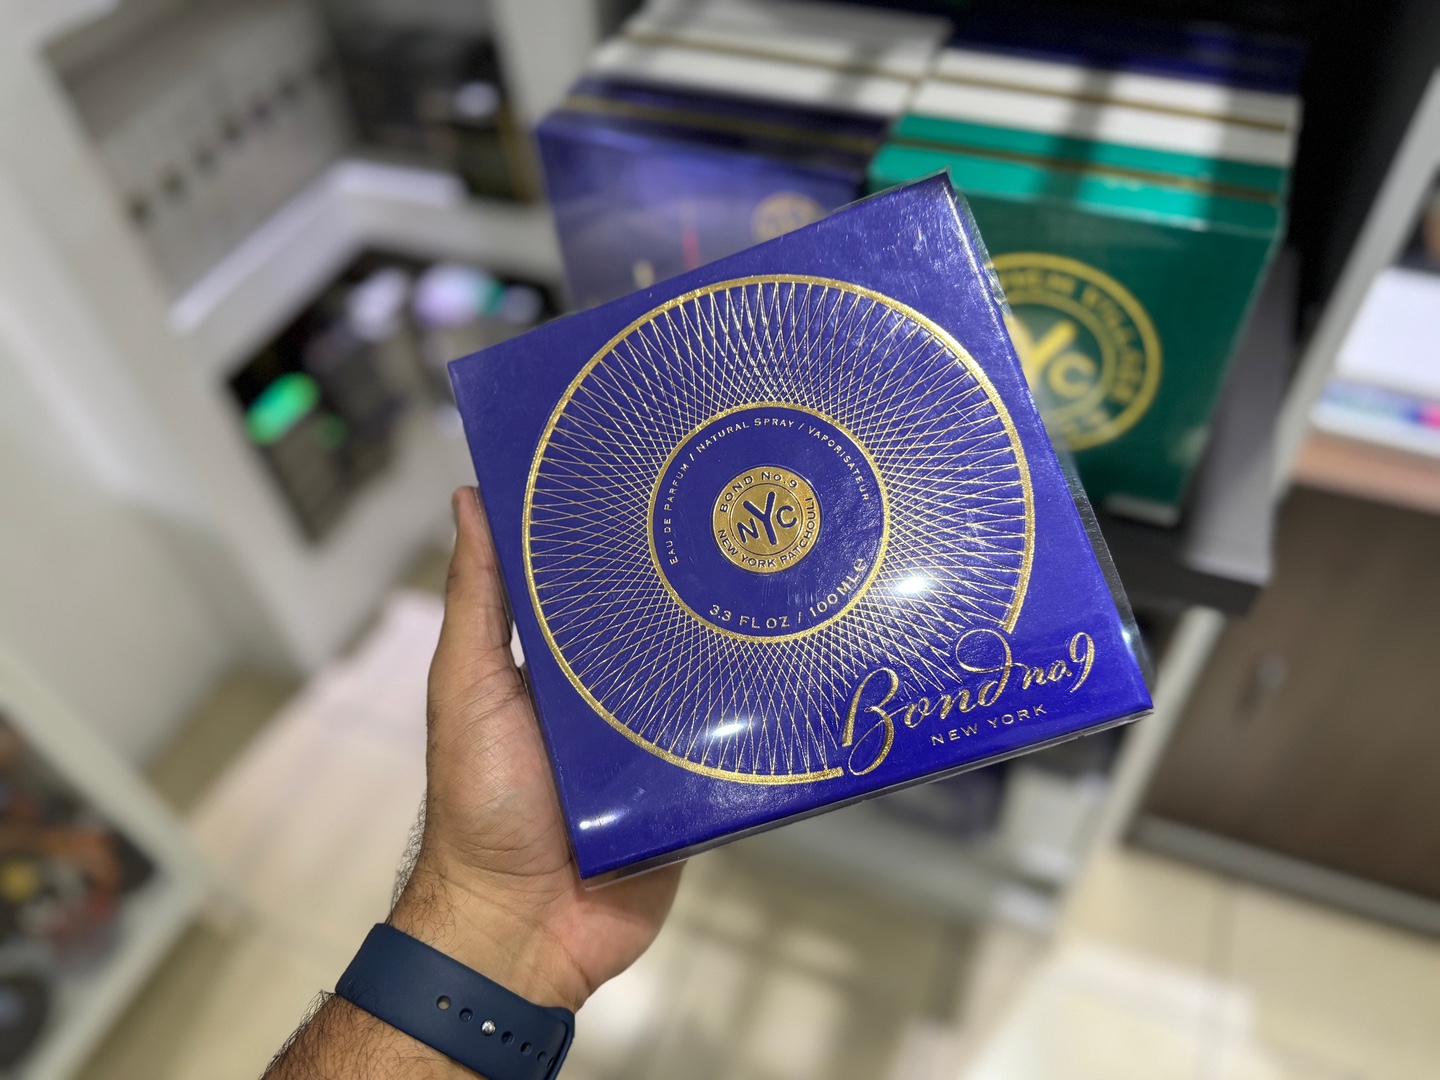 joyas, relojes y accesorios - Perfume Bond No. 9 NYC New York Patchouli 100% Original, RD$ 16,500 NEG 0